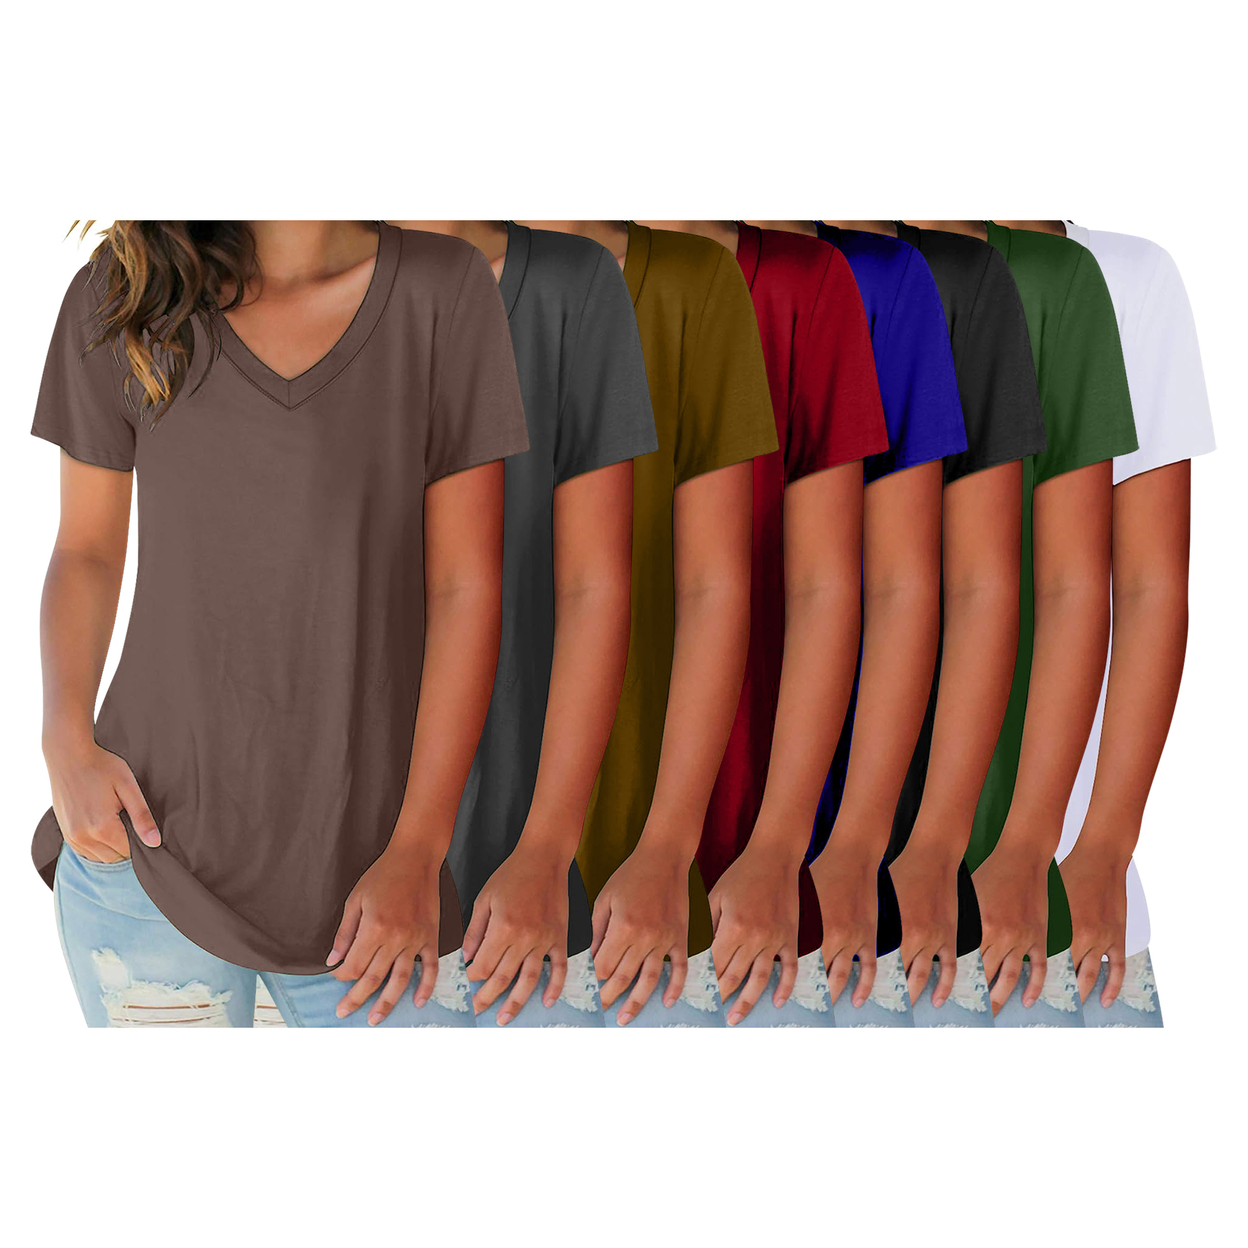 2-Pack: Women's Ultra Soft Smooth Cotton Blend Basic V-Neck Short Sleeve Shirts - Grey & Green, Medium